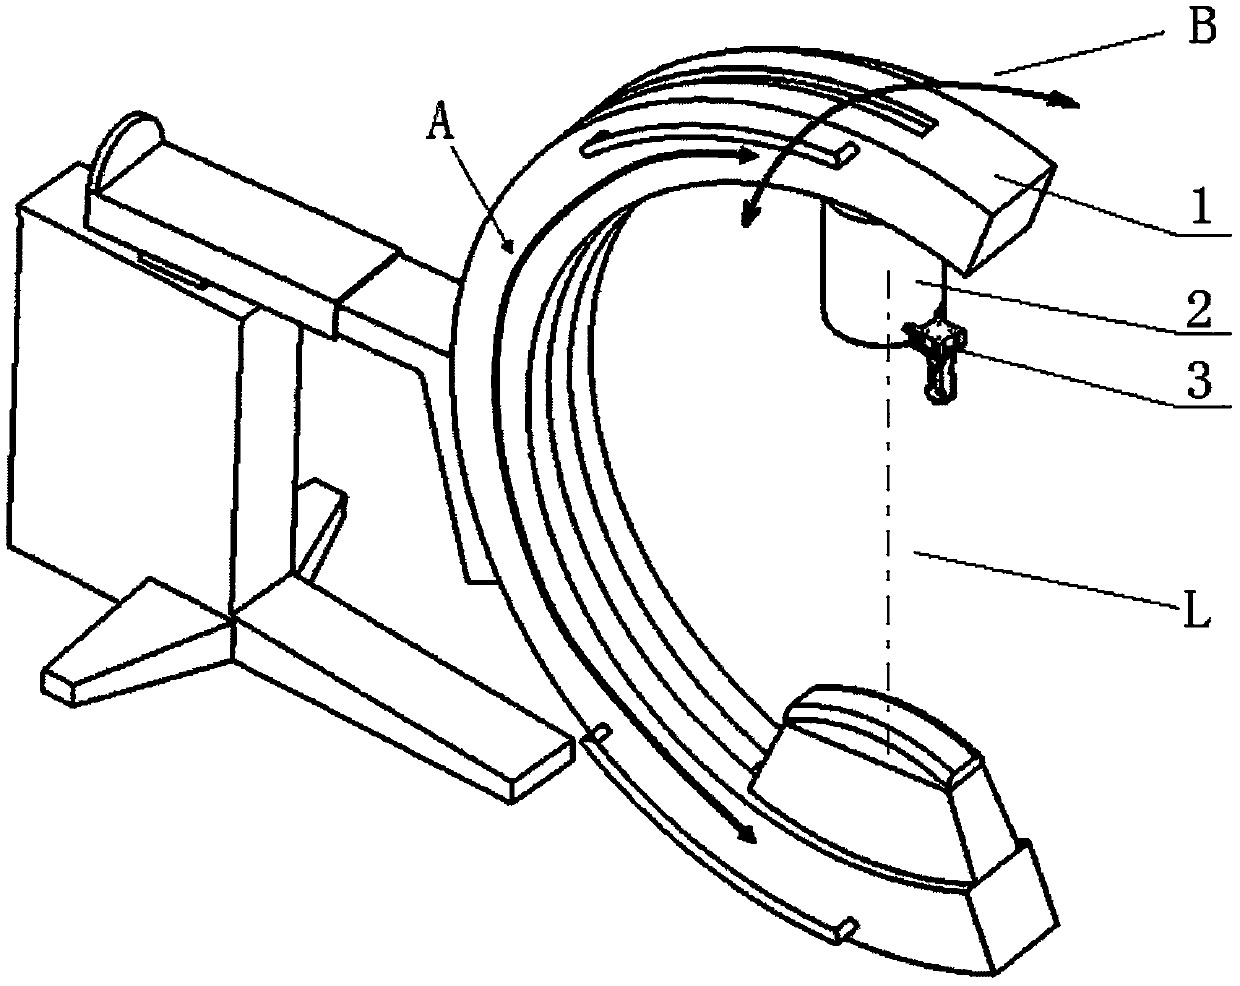 A Method of Obtaining Standard Axial Diagram of Vertebral Pedicle